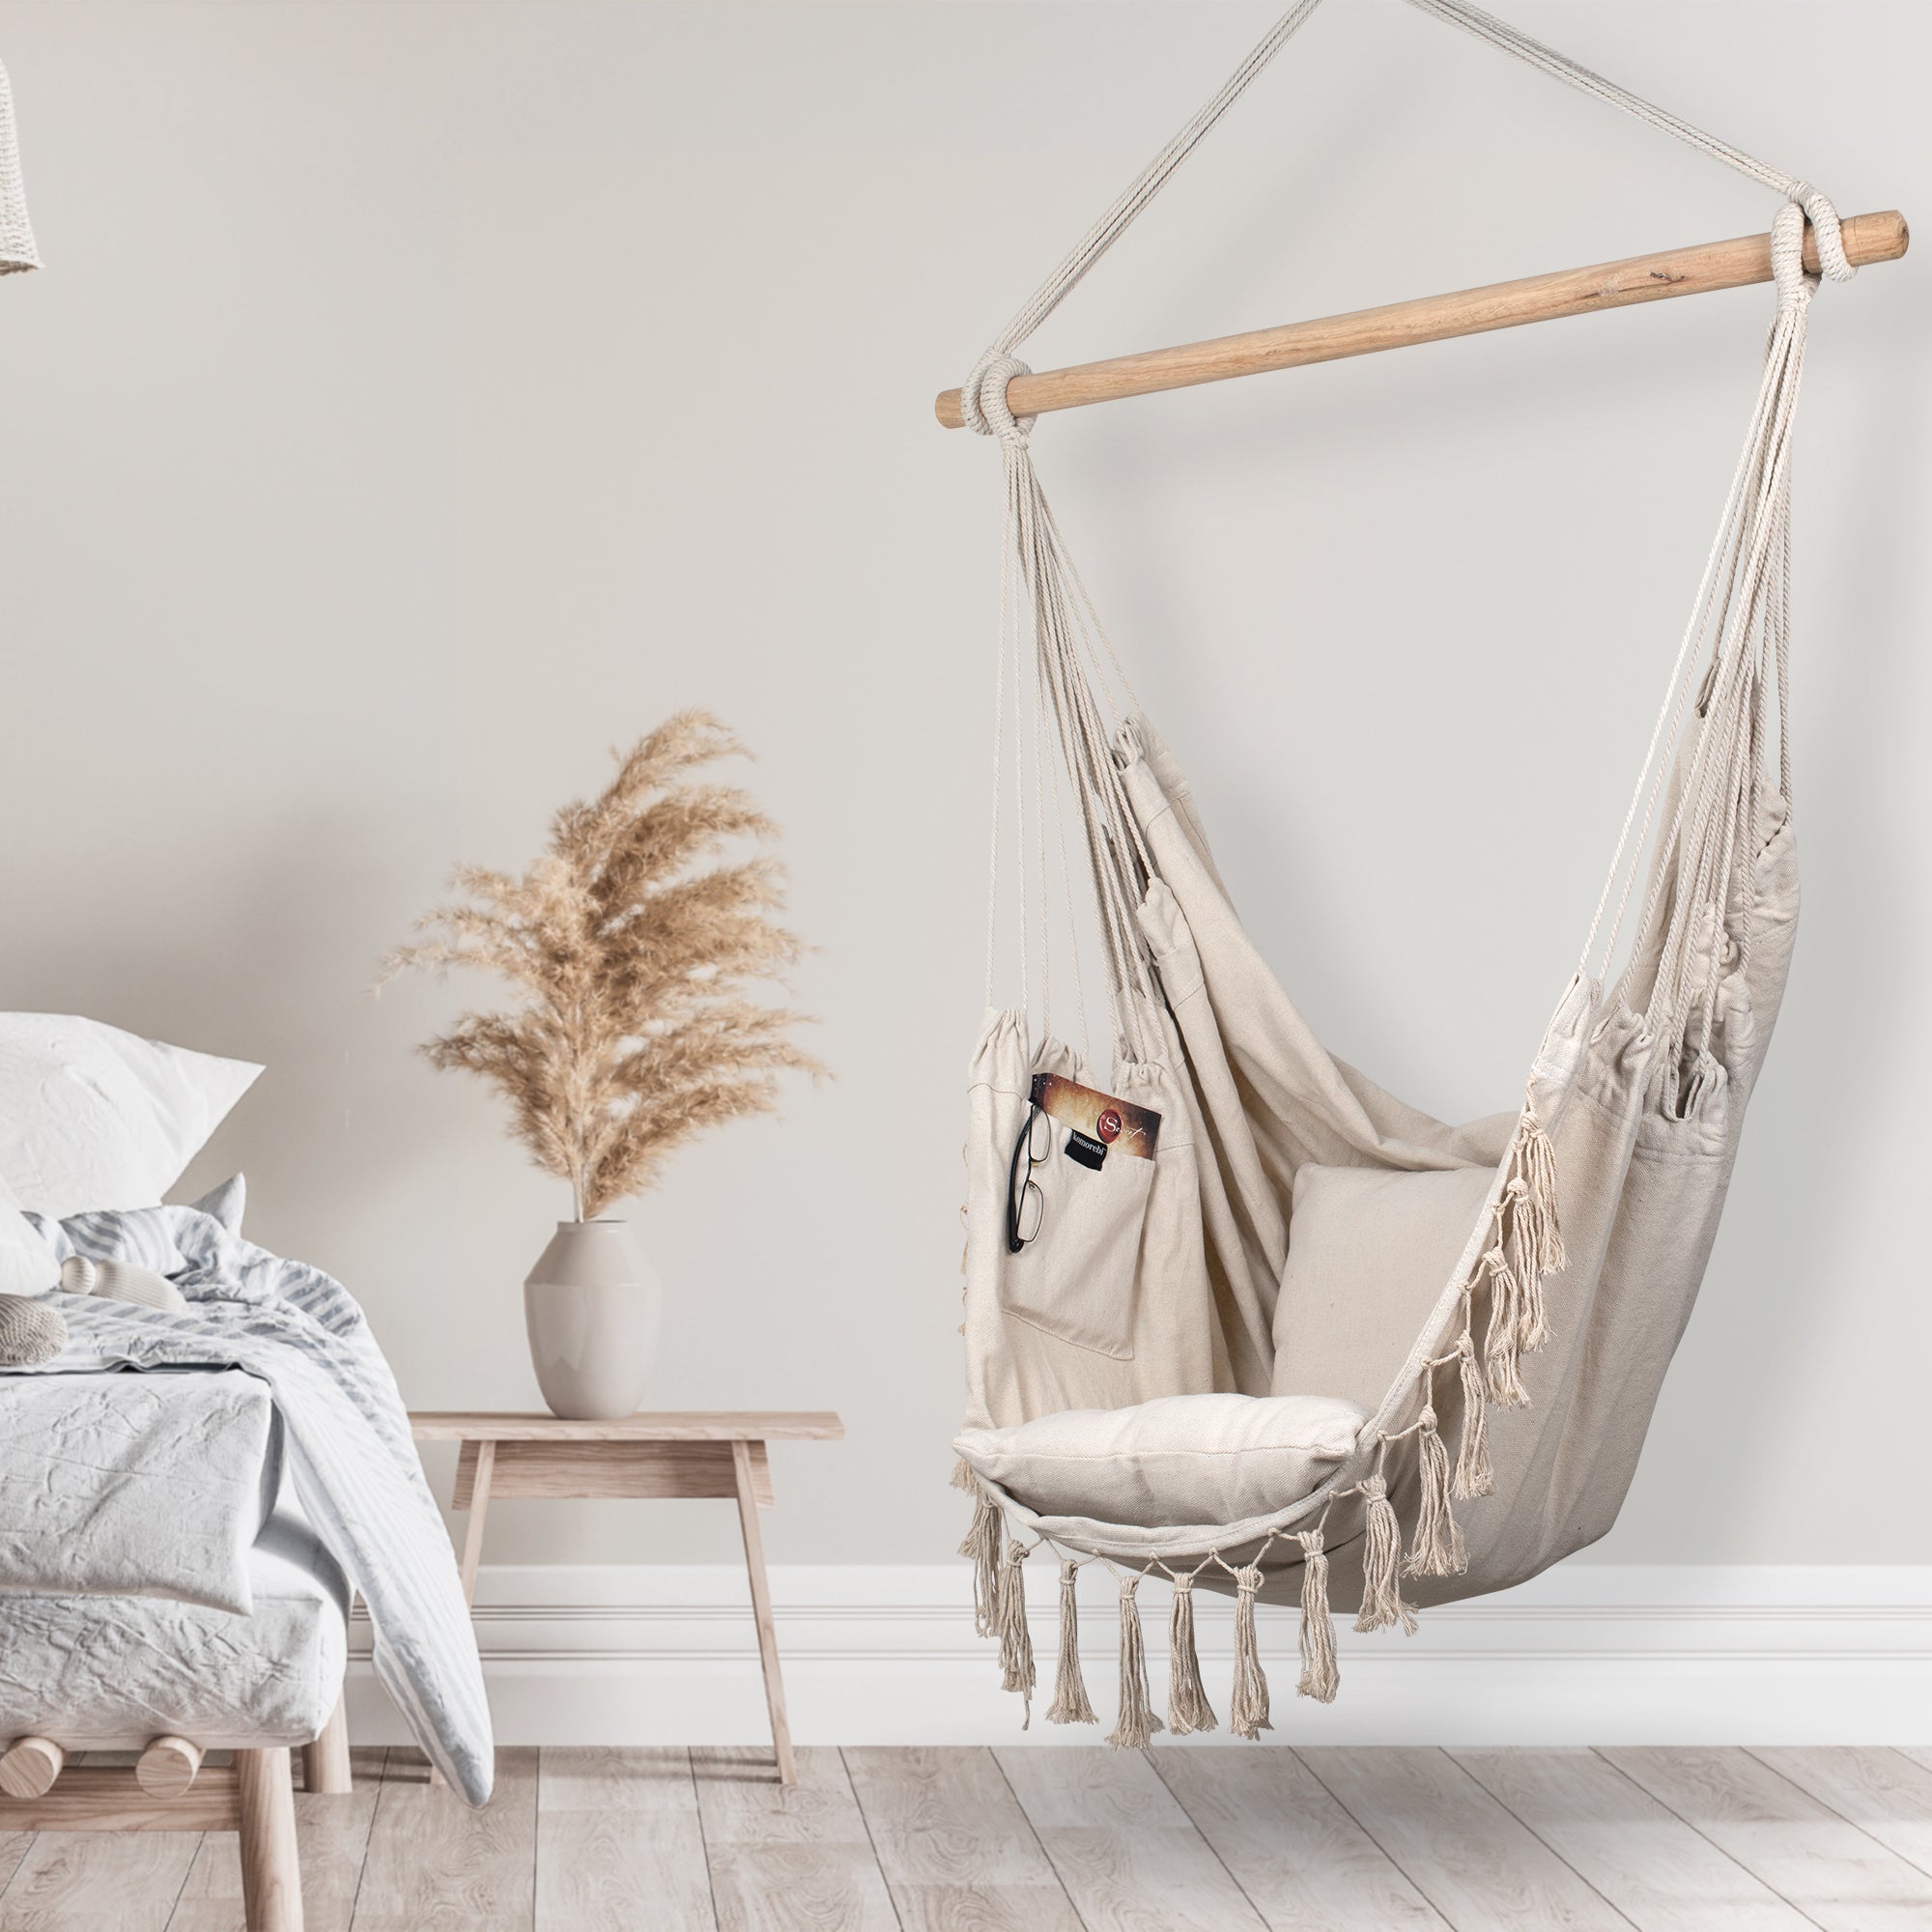 Komorebi Hammock Chair | Hanging Rope Swing Seat for Indoor & Outdoor: Ivory